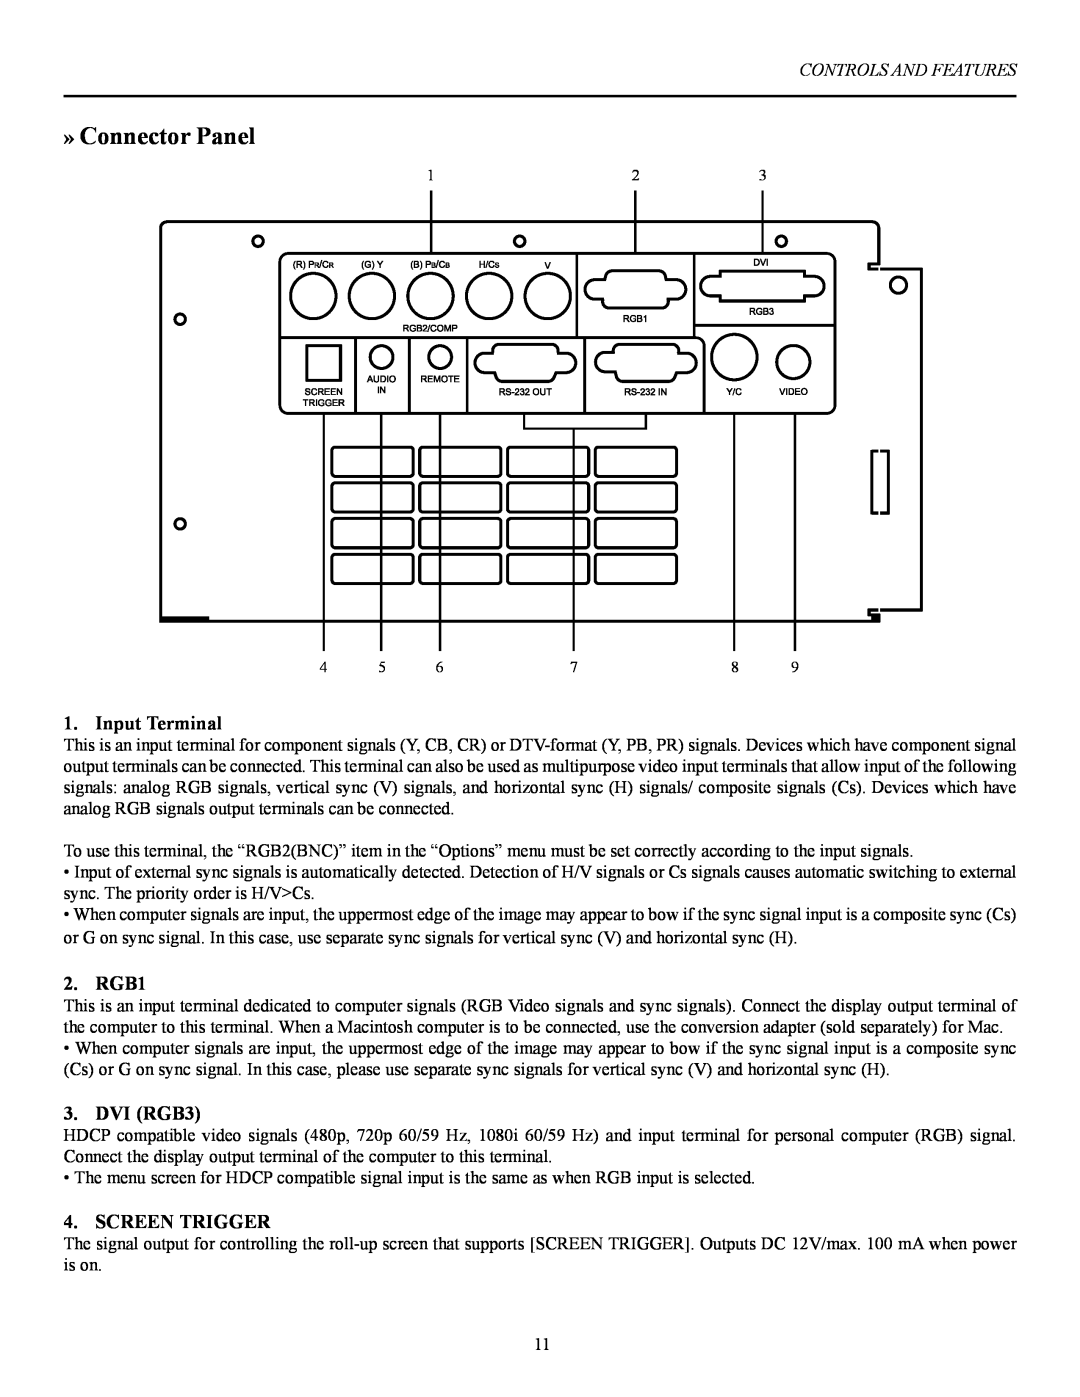 Vidikron 60 manual » Connector Panel, Input Terminal, RGB1, DVI RGB3, Screen Trigger 